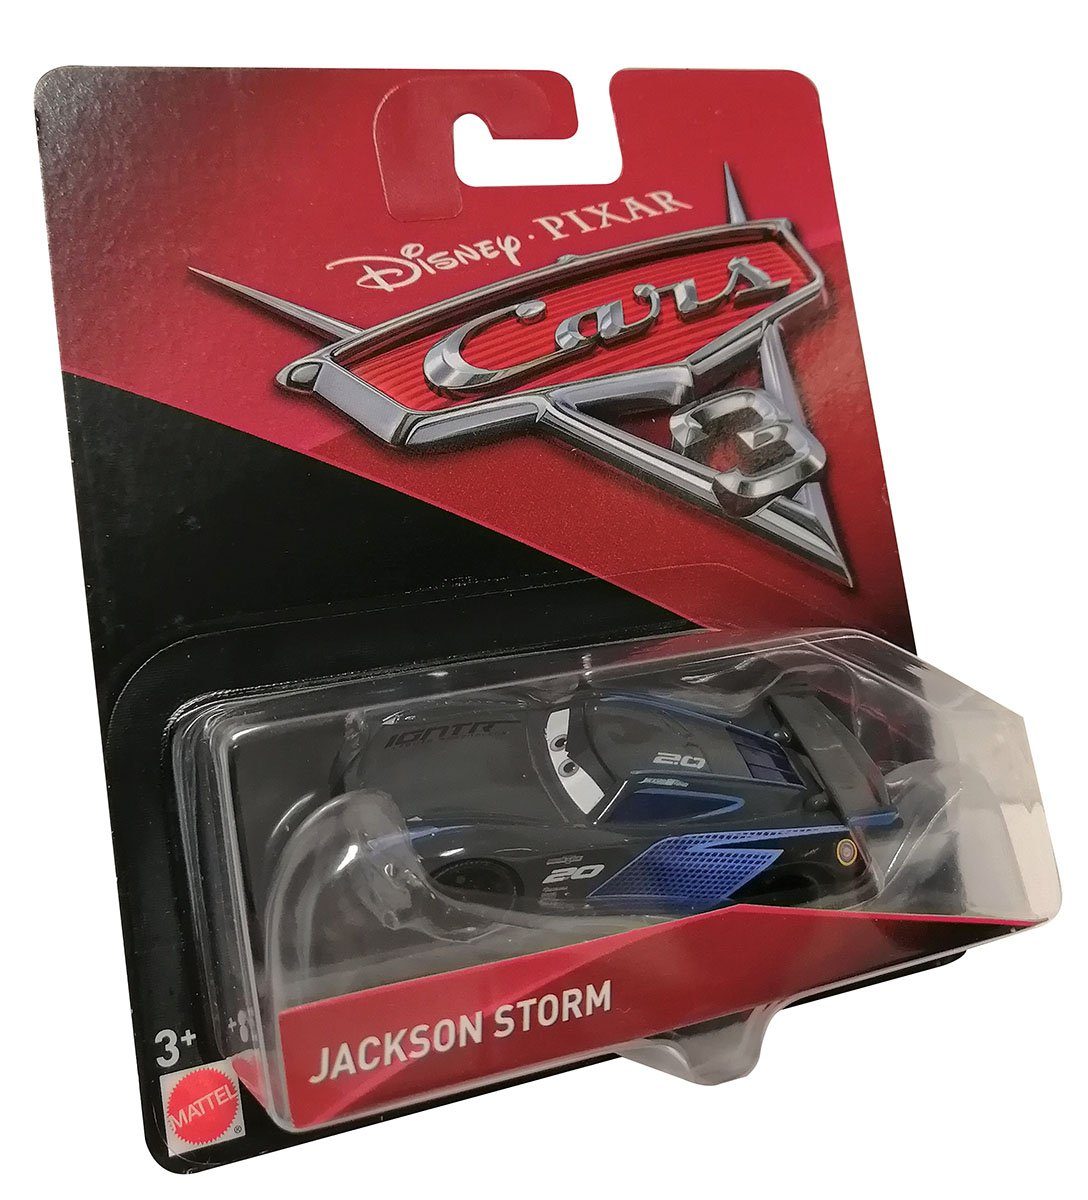 Spielzeug-Auto Cars Storm Mattel® 2 Mattel Disney Pixar DXV34 - 3 Jackson